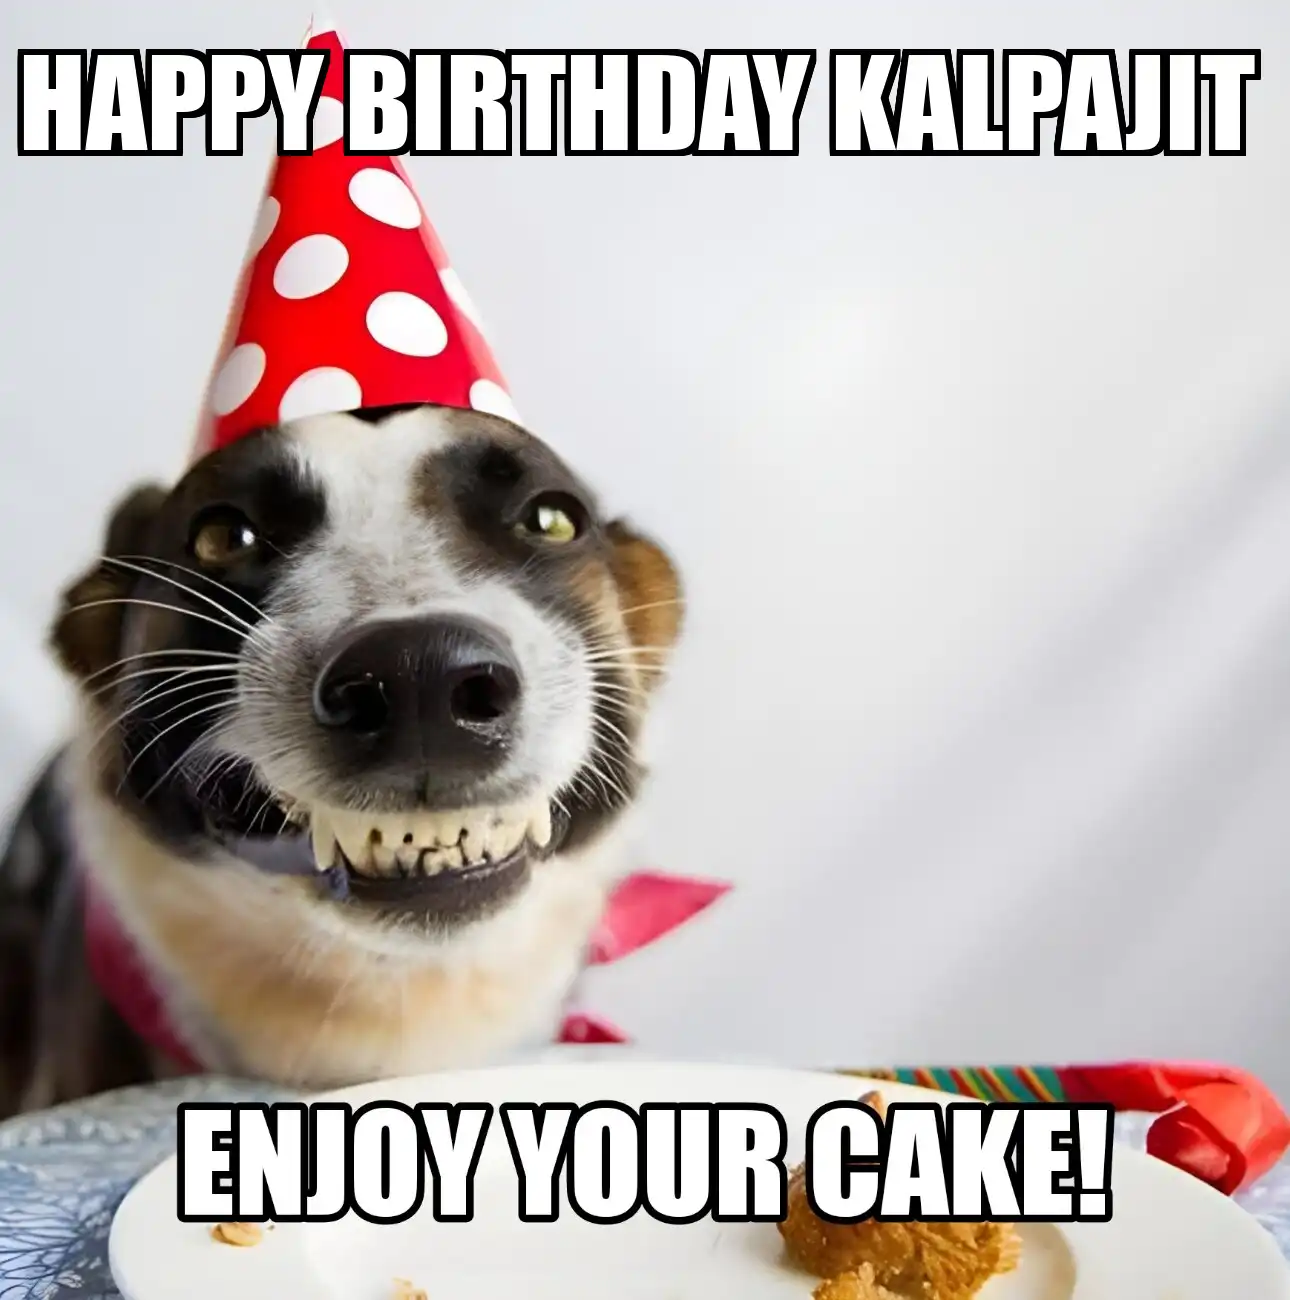 Happy Birthday Kalpajit Enjoy Your Cake Dog Meme